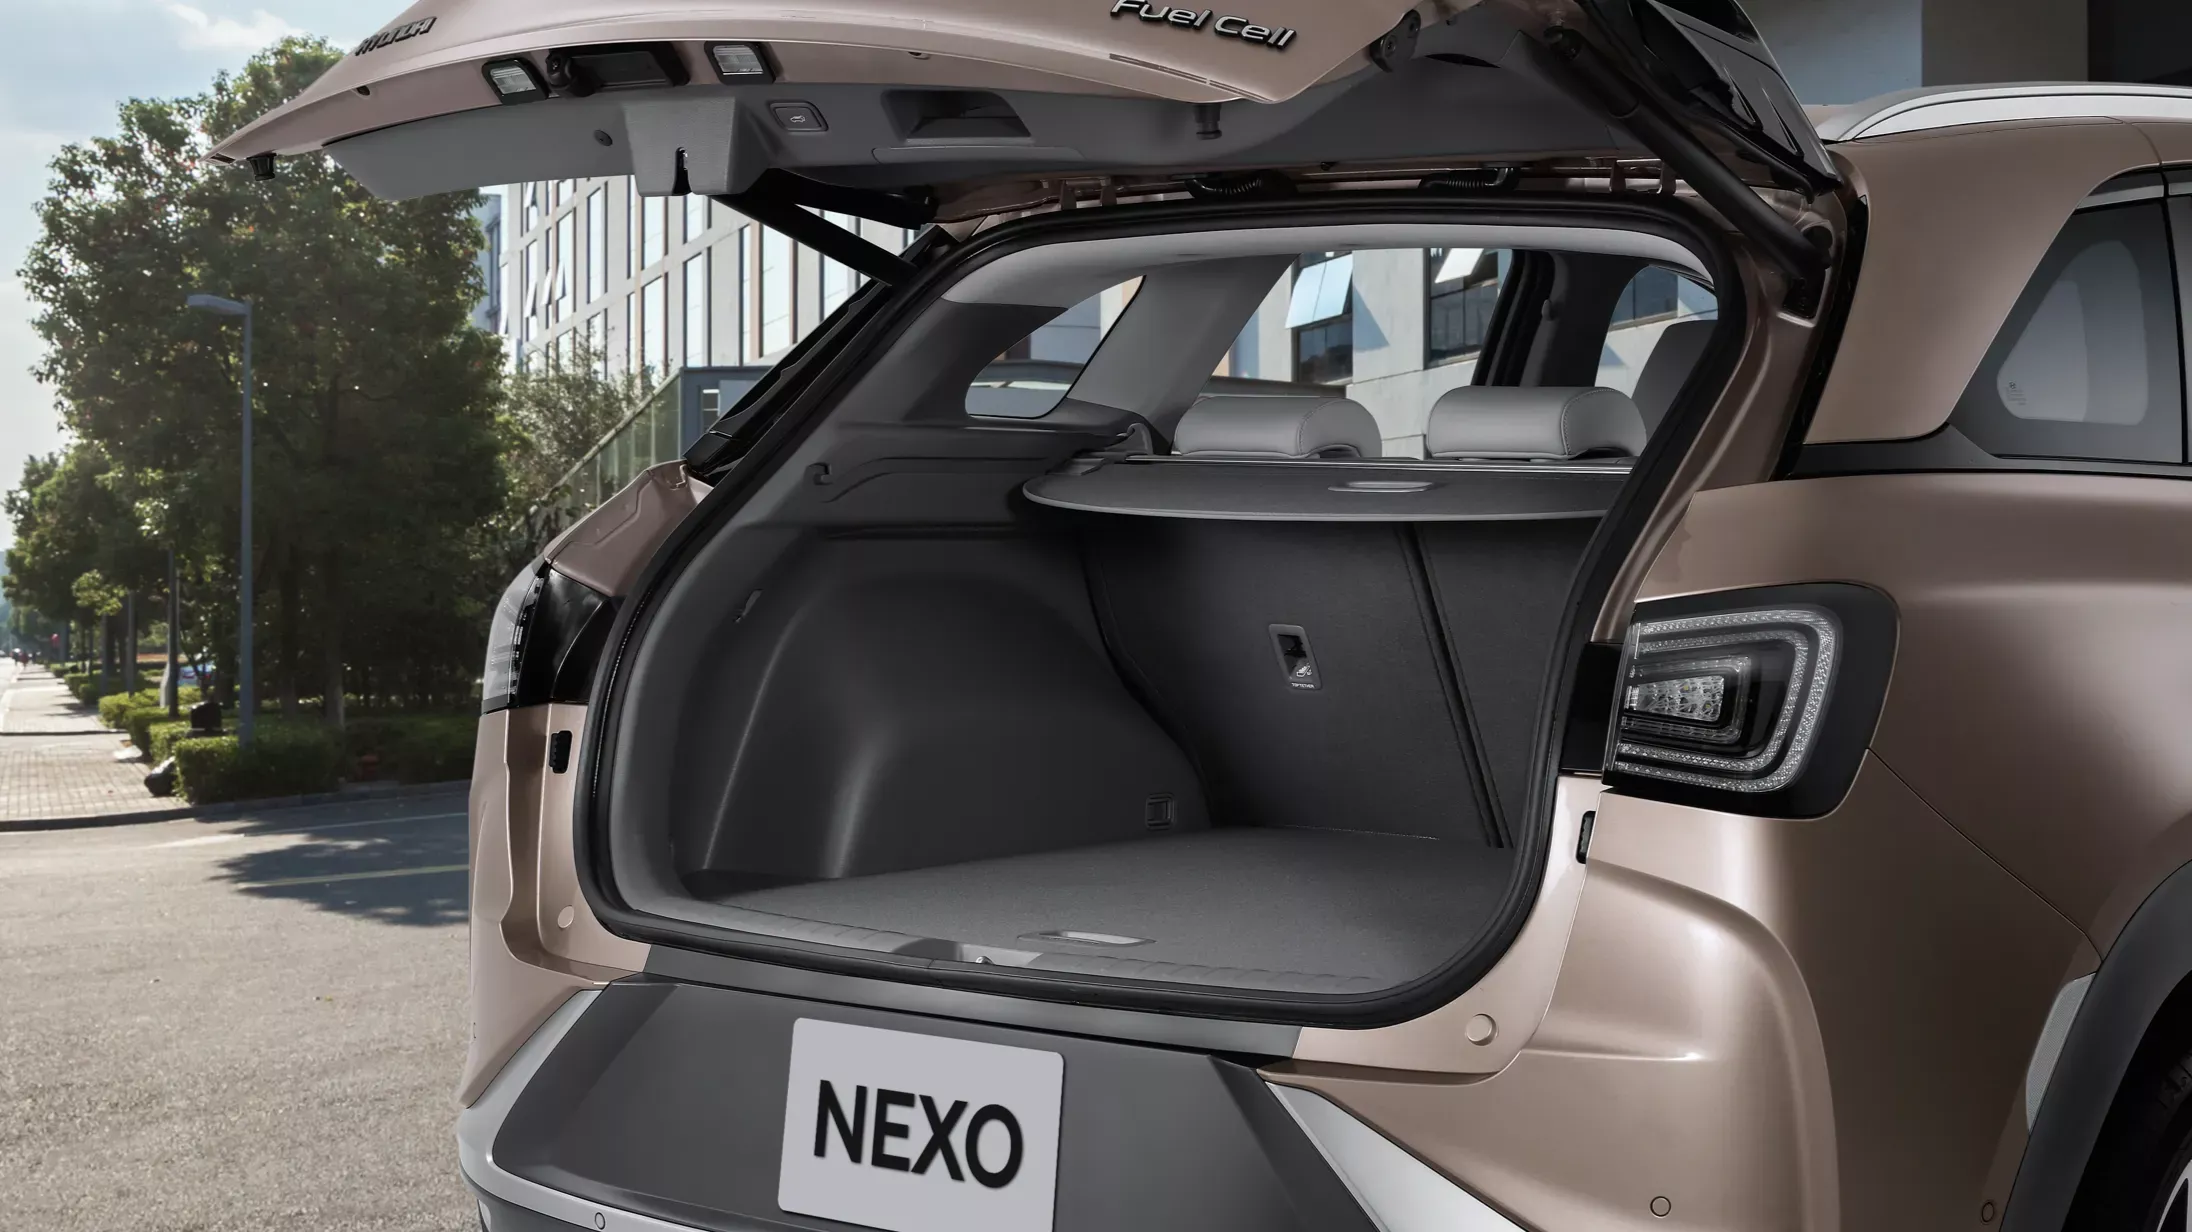 NEXO (ネッソ) 燃料電池車 FCEV インテリア スマートパワーテールゲート - Hyundai Mobility Japan (ヒョンデモビリティジャパン)